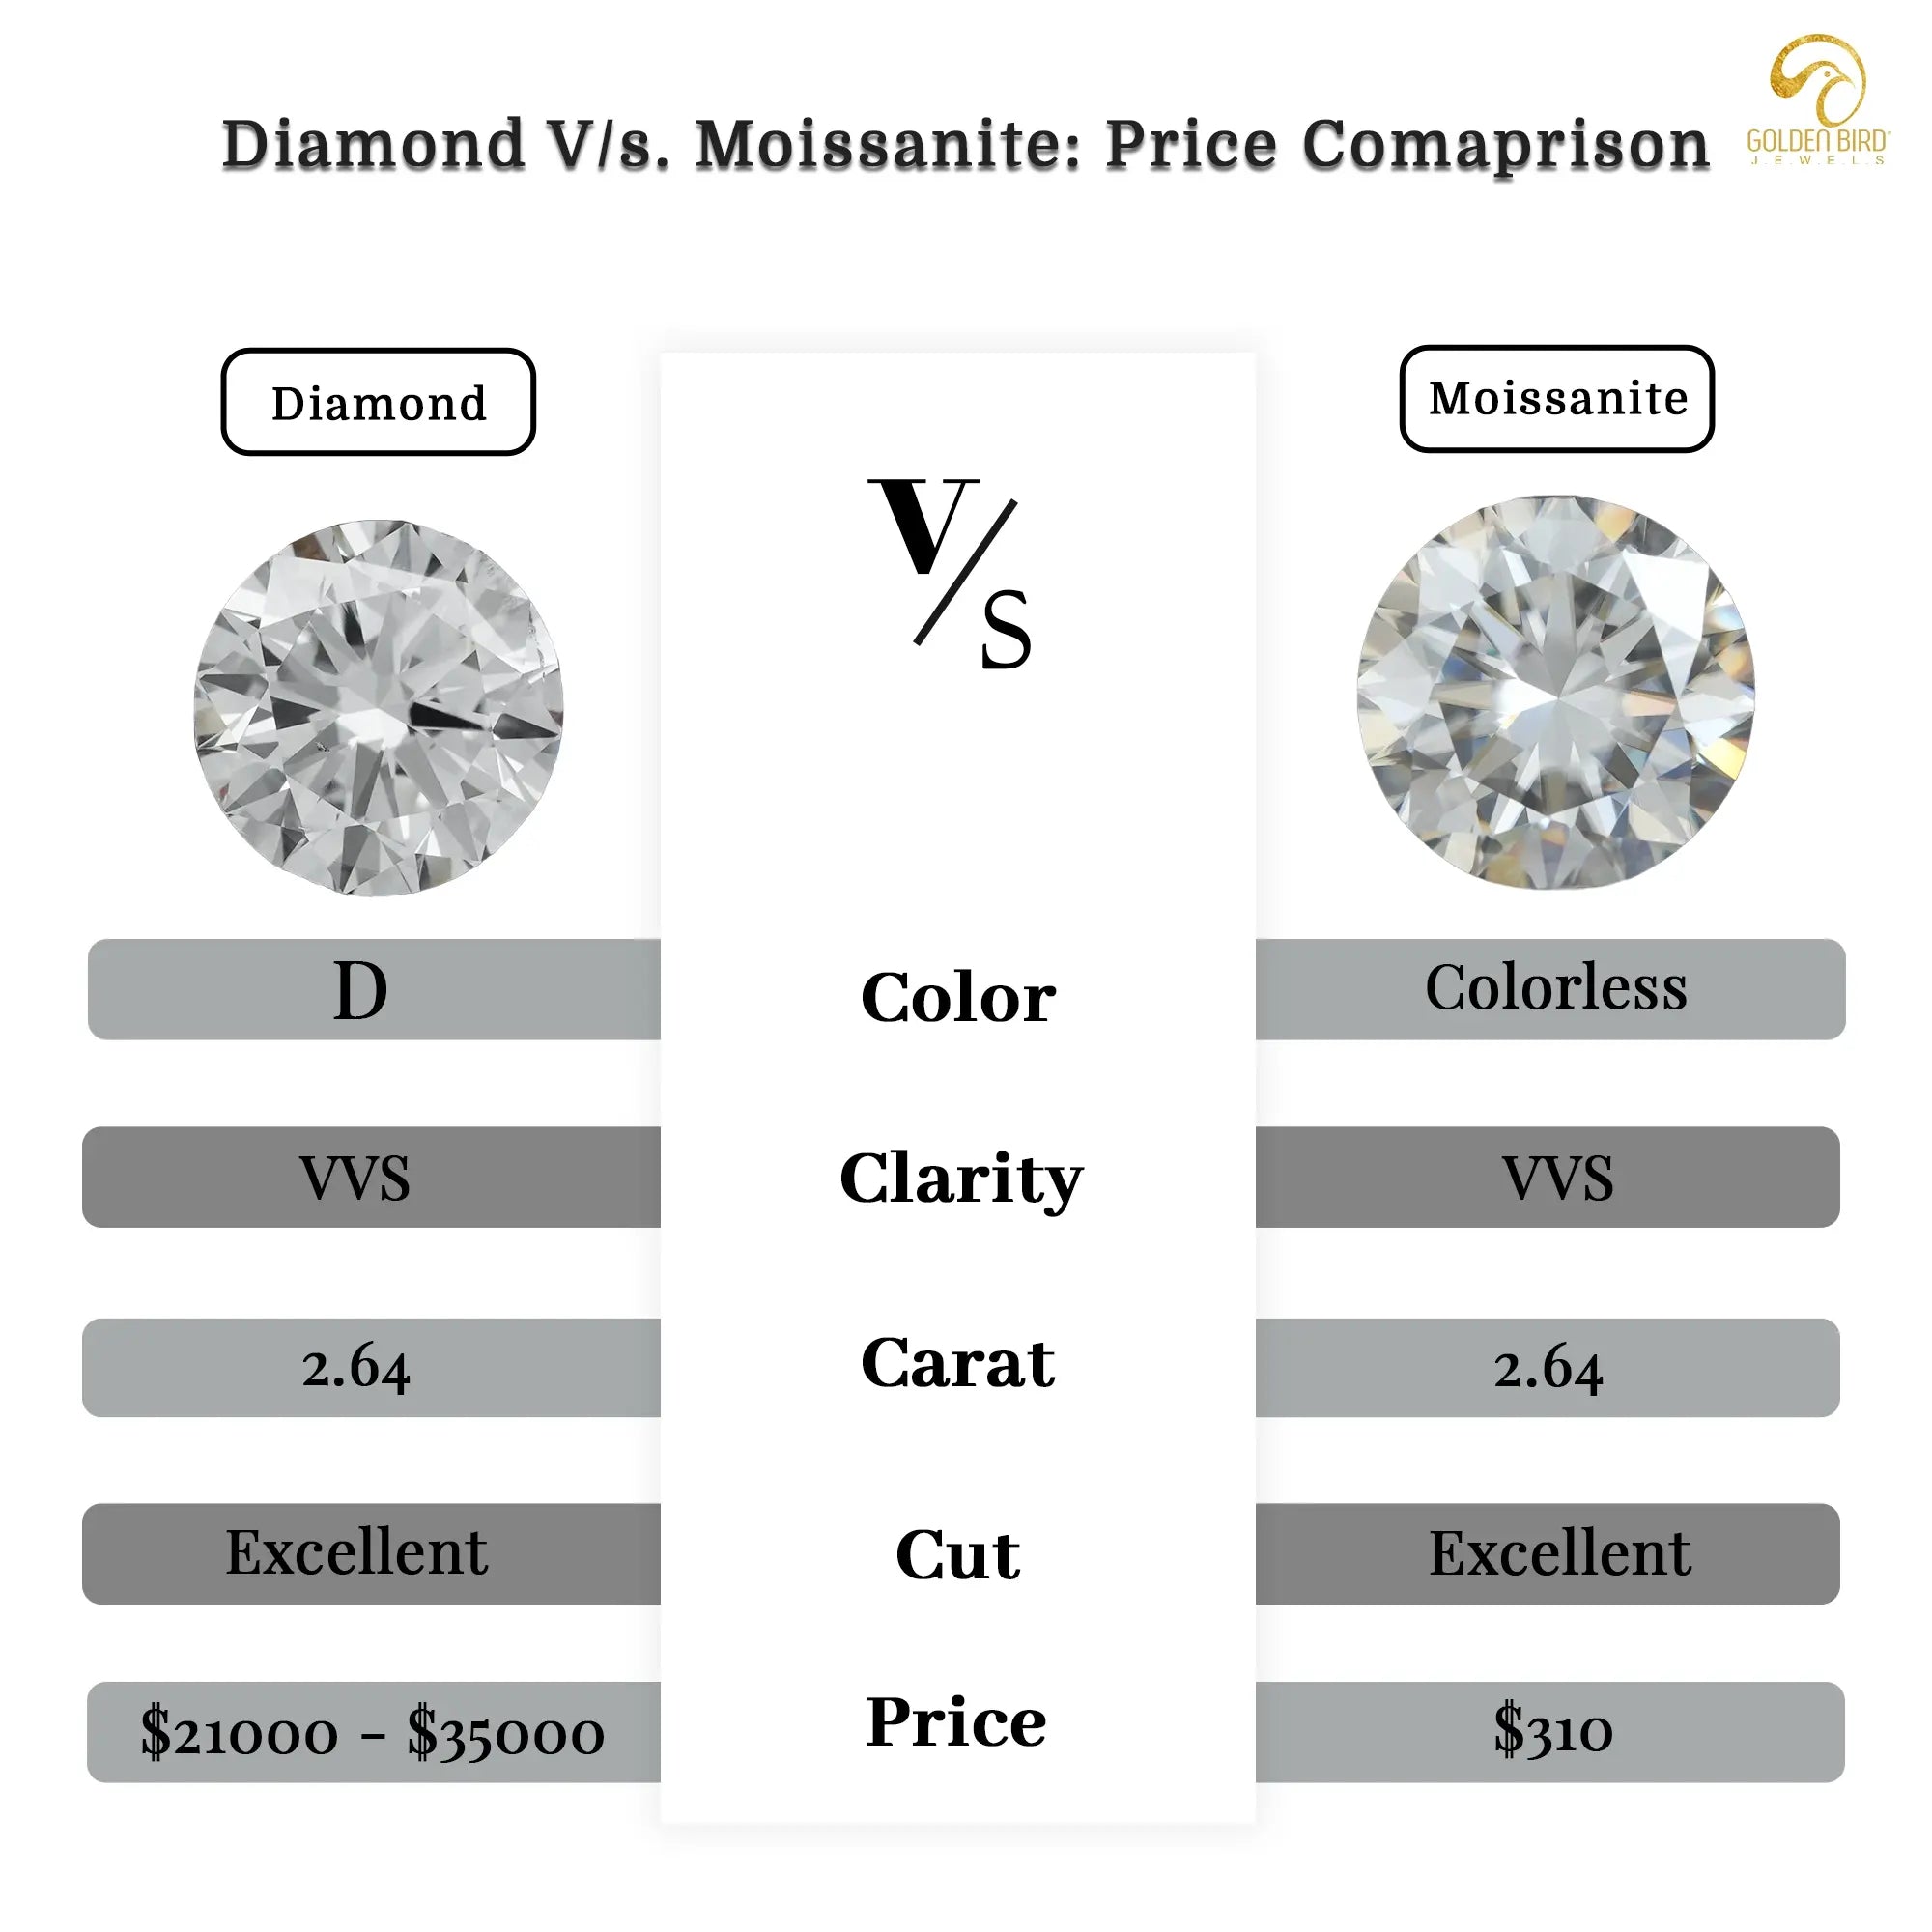 Diamond vs moissanite price comaprison in color, carat weights, clarity and cut grades